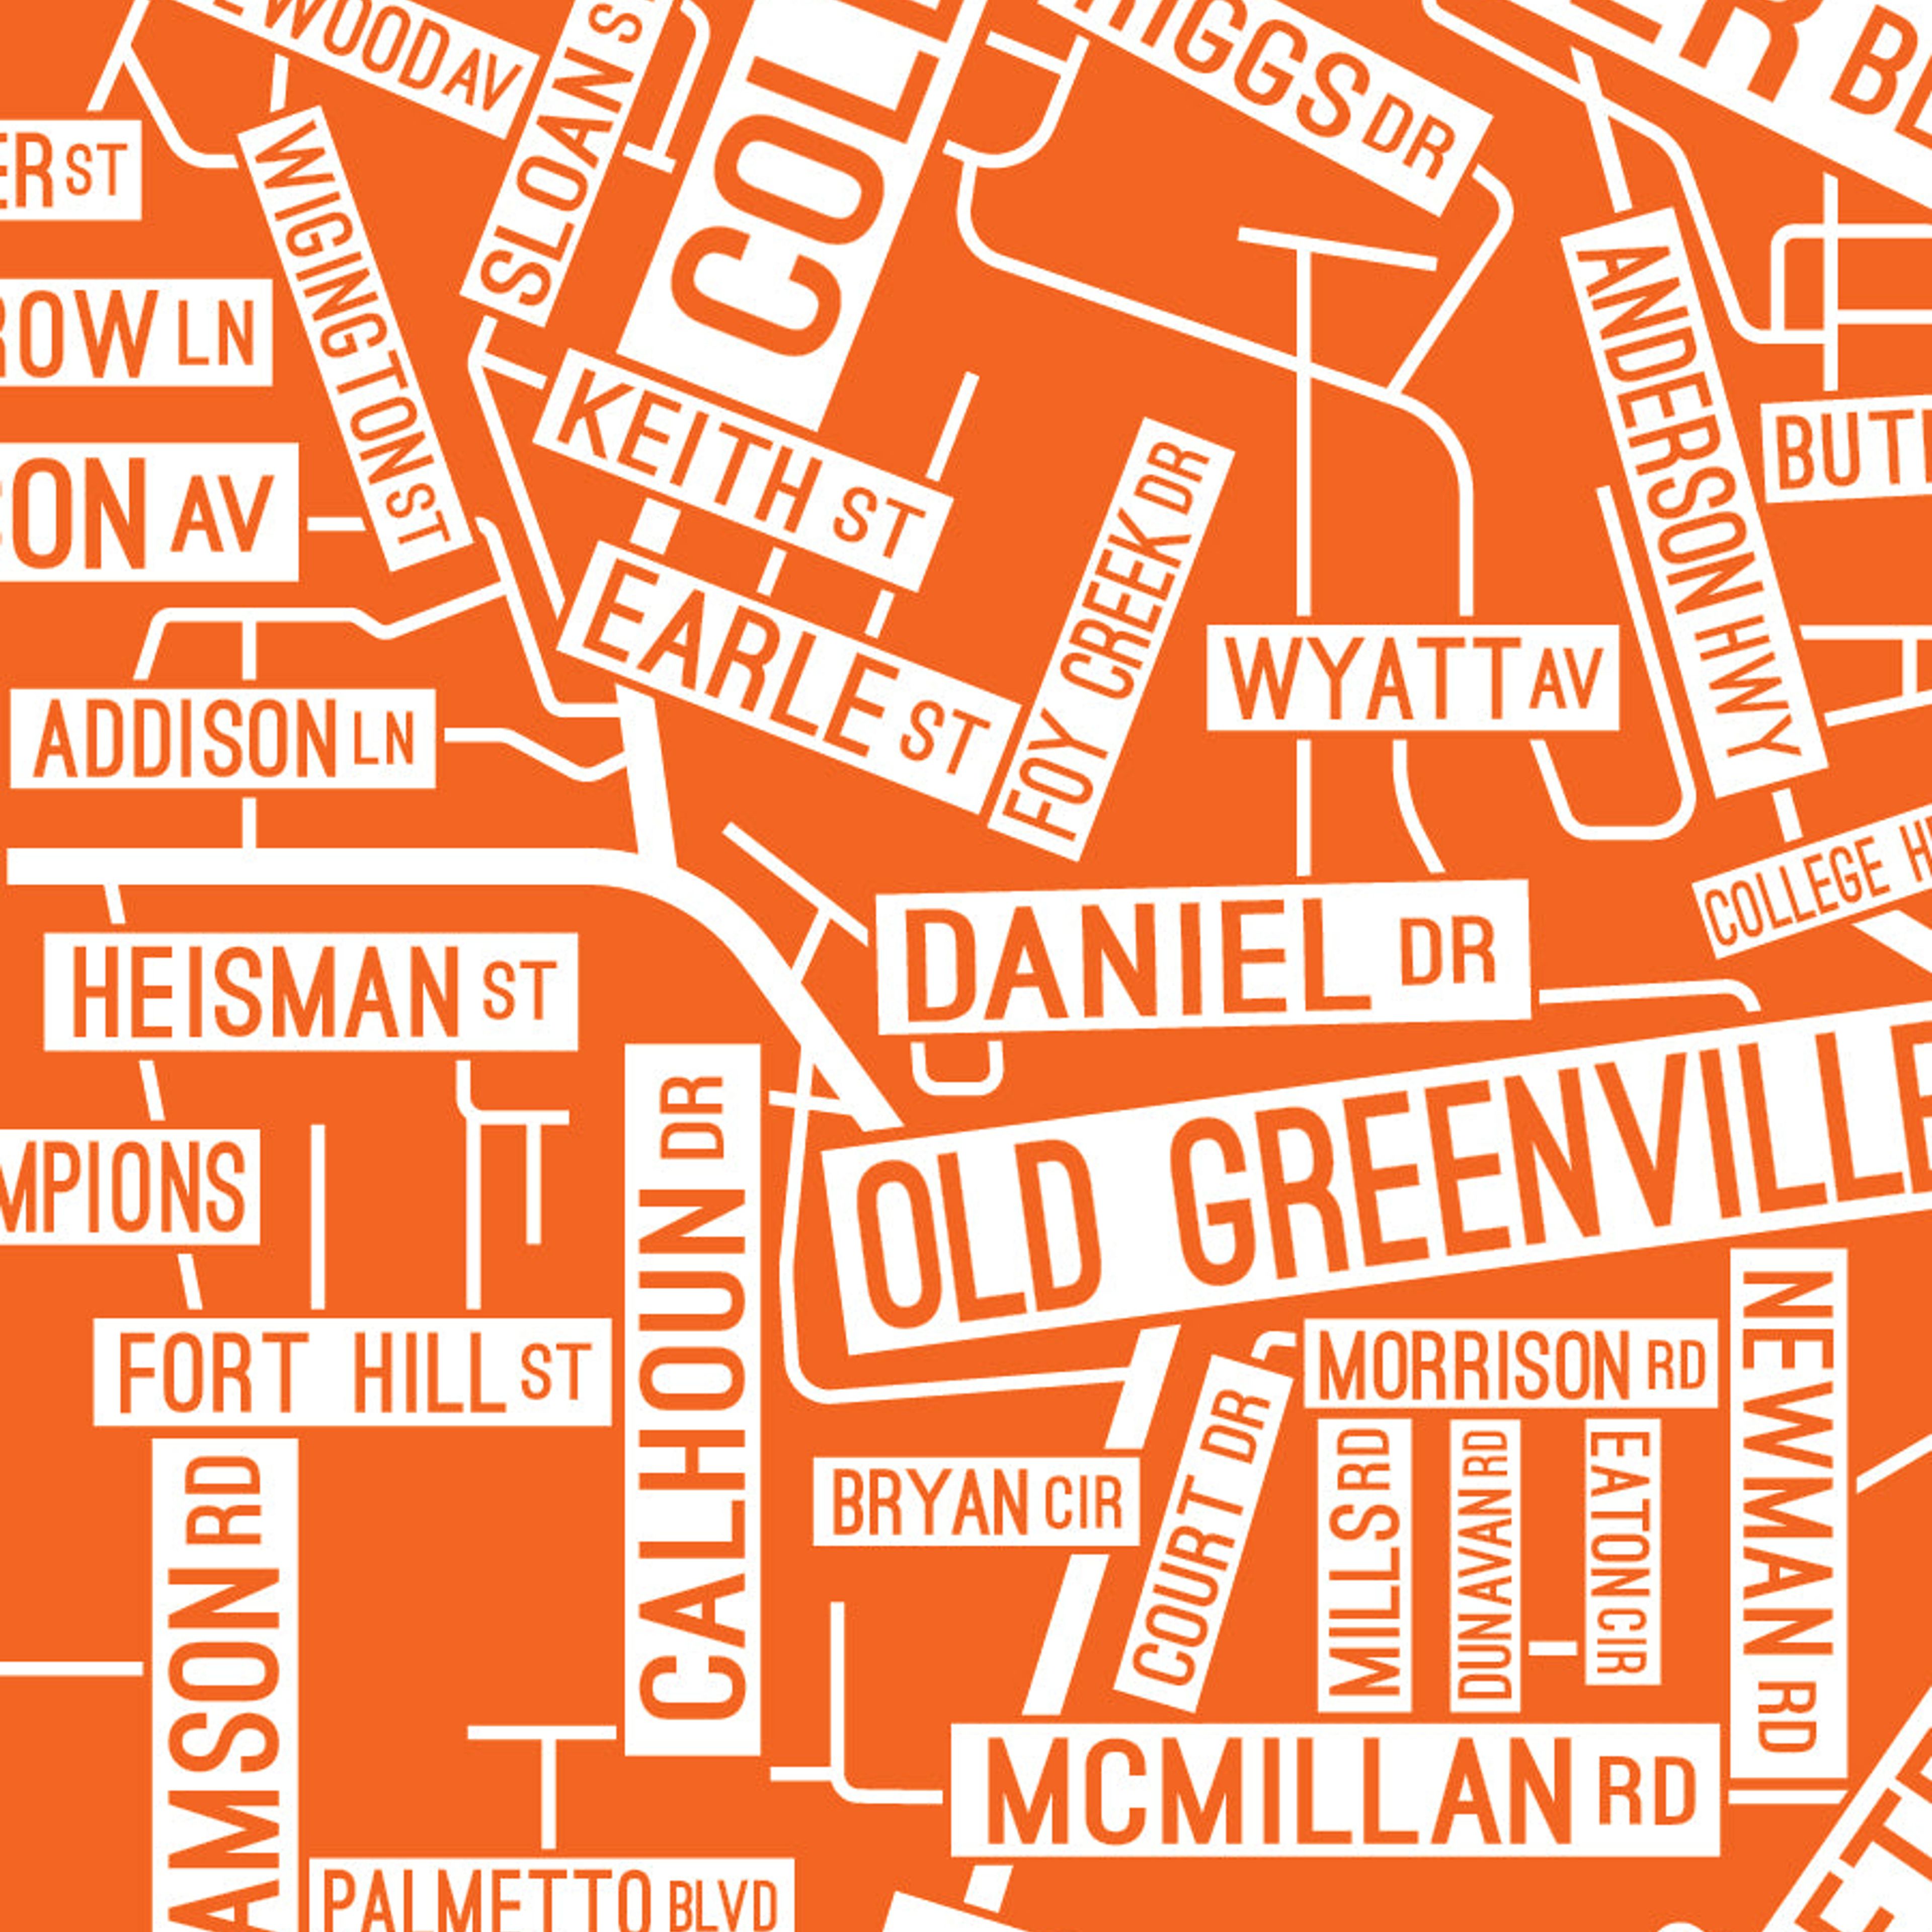 Clemson, South Carolina Street Map Screen Print